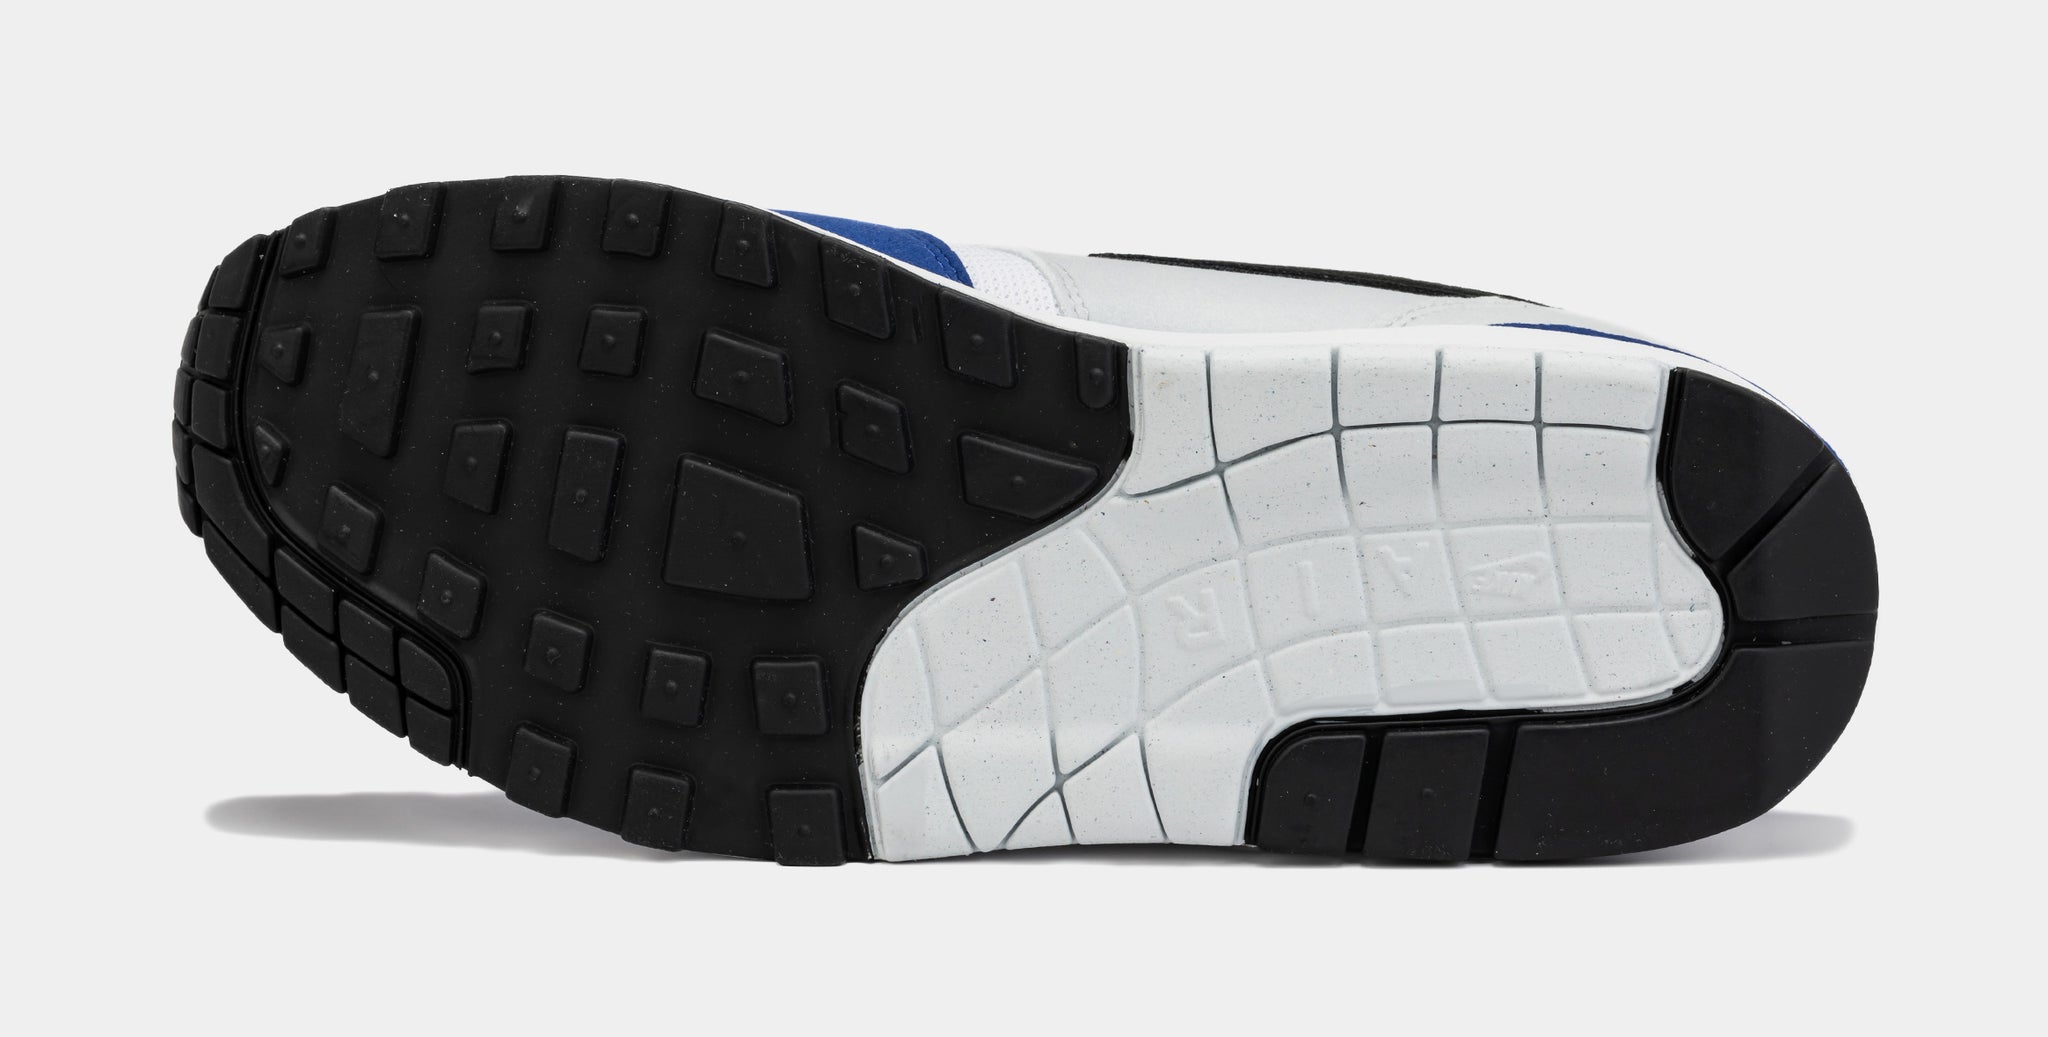 Men's shoes Nike Air Max 1 Premium Mineral Slate/ Deep Royal Blue